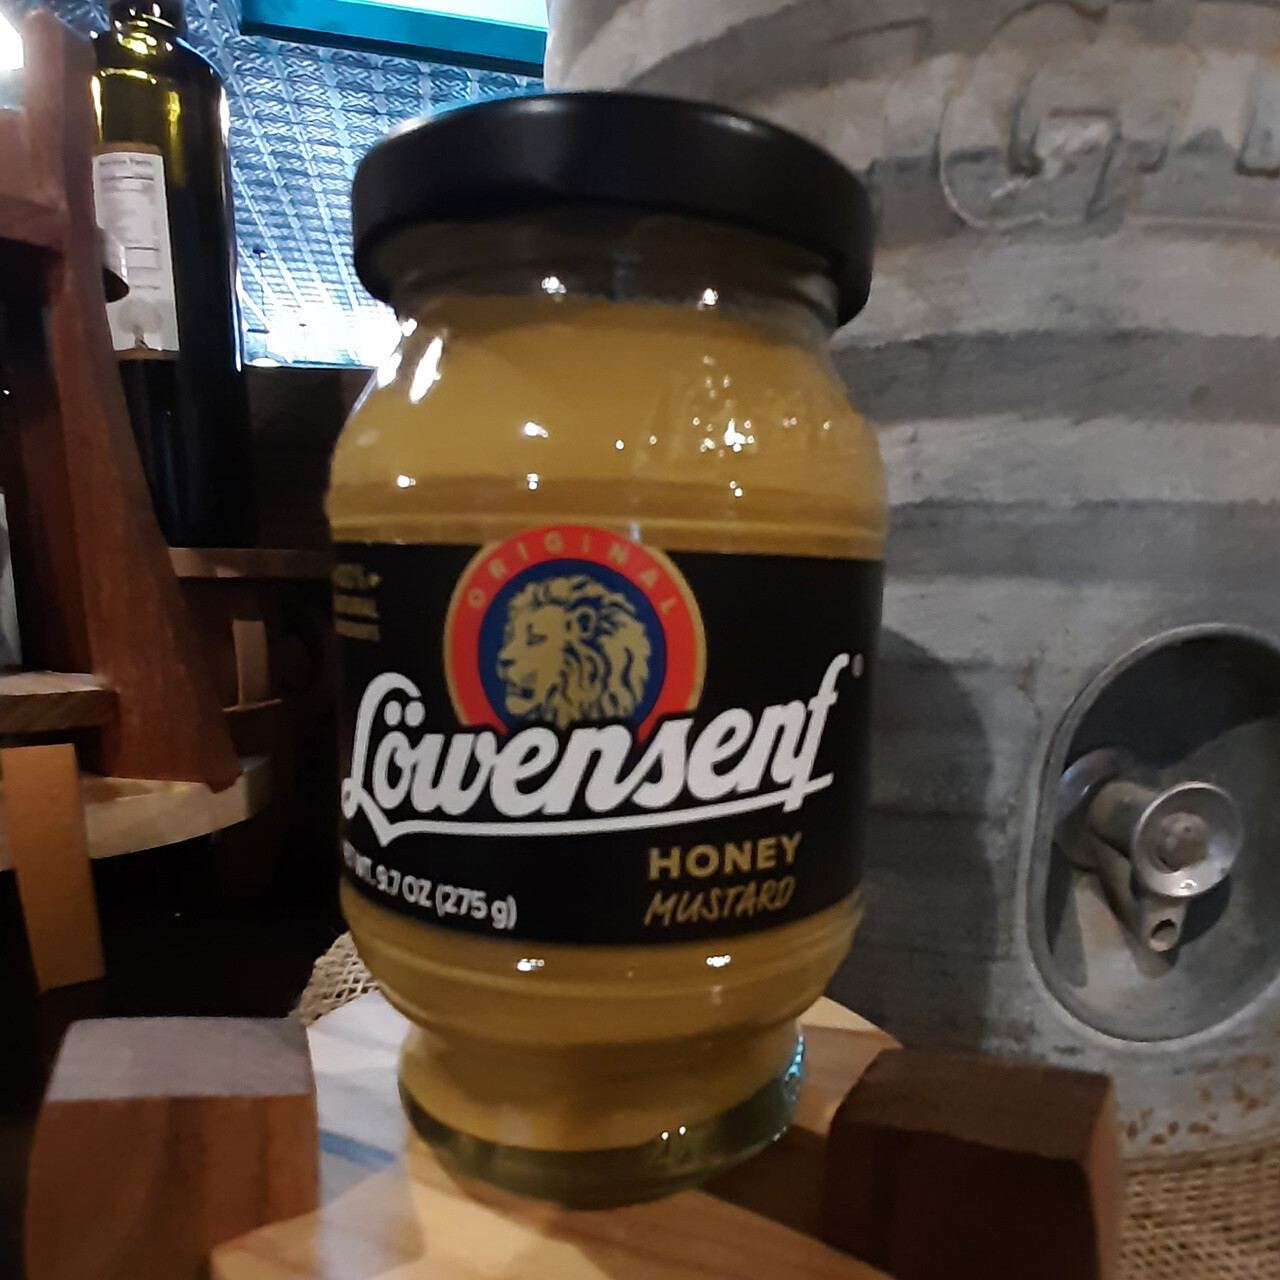 Lowensenf Honey Mustard